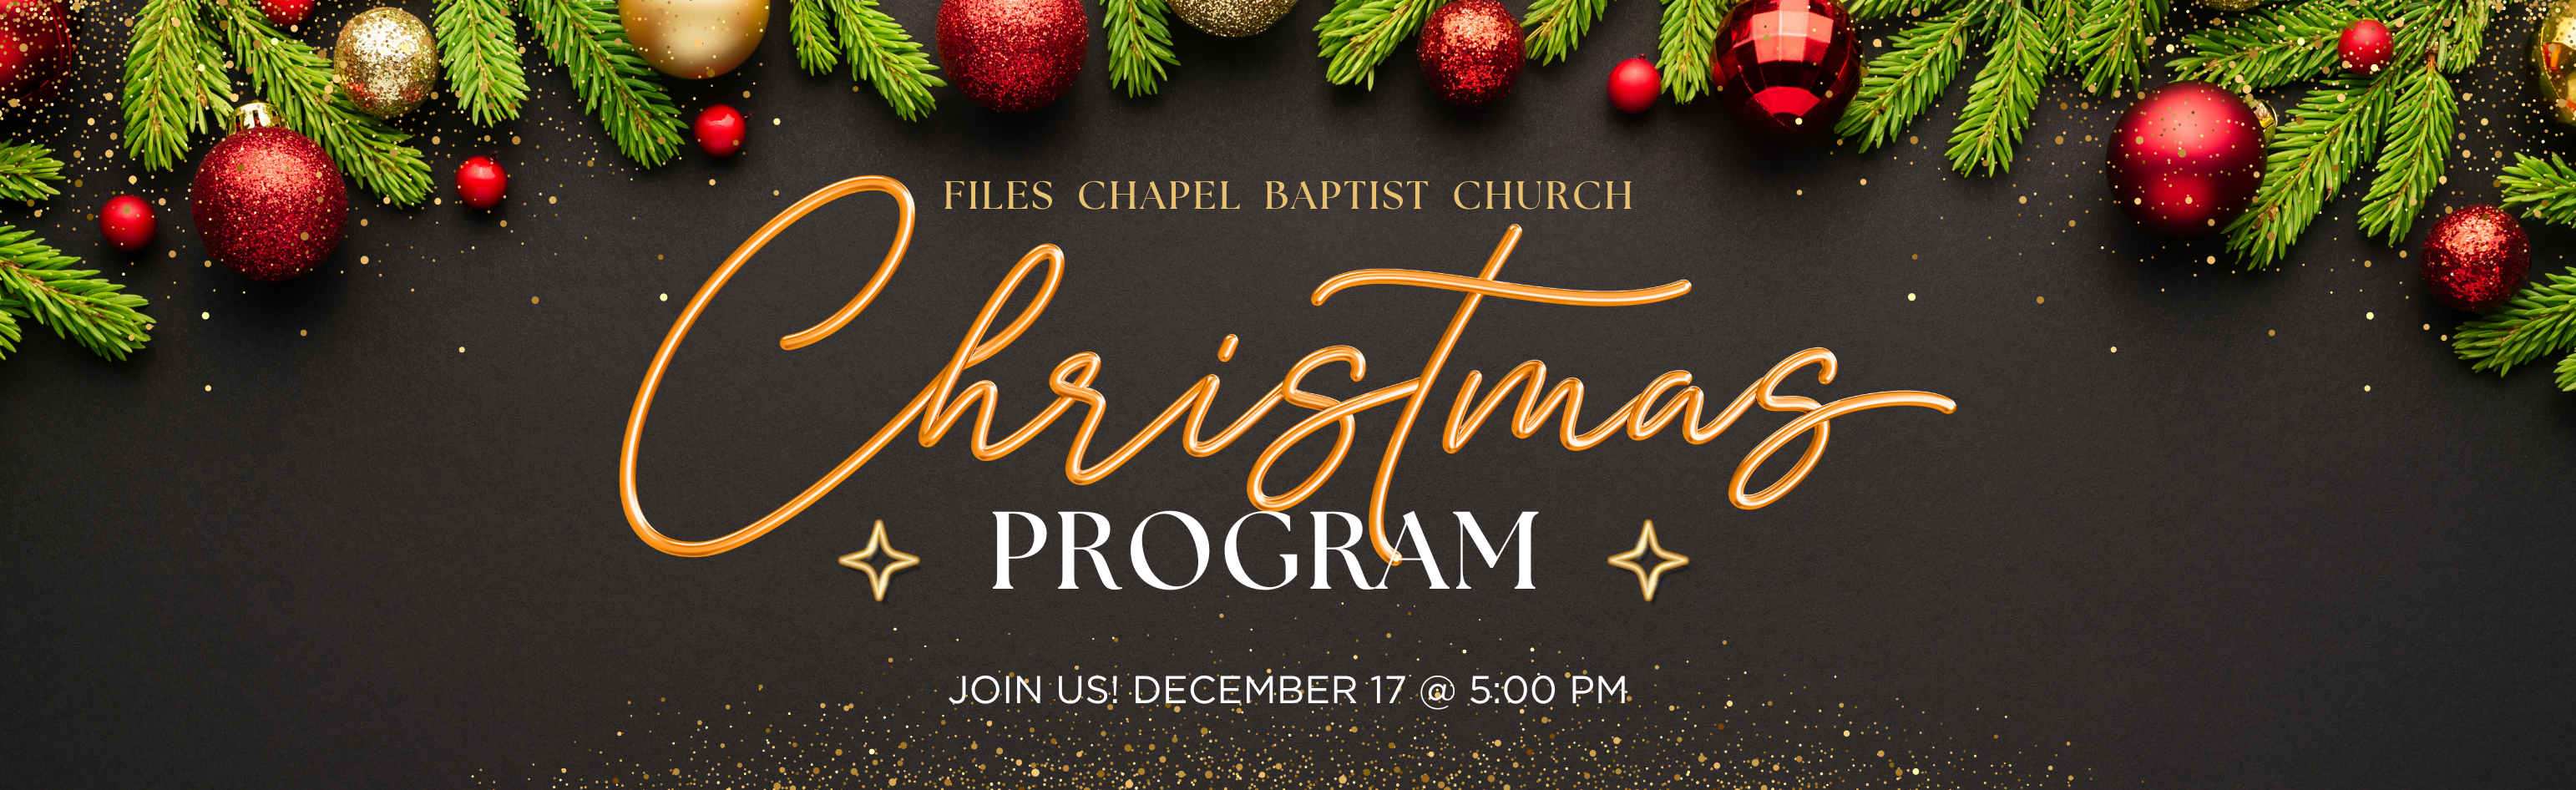 Files Chapel Baptist Church Annual Christmas Program - Dec 17 at 5PM